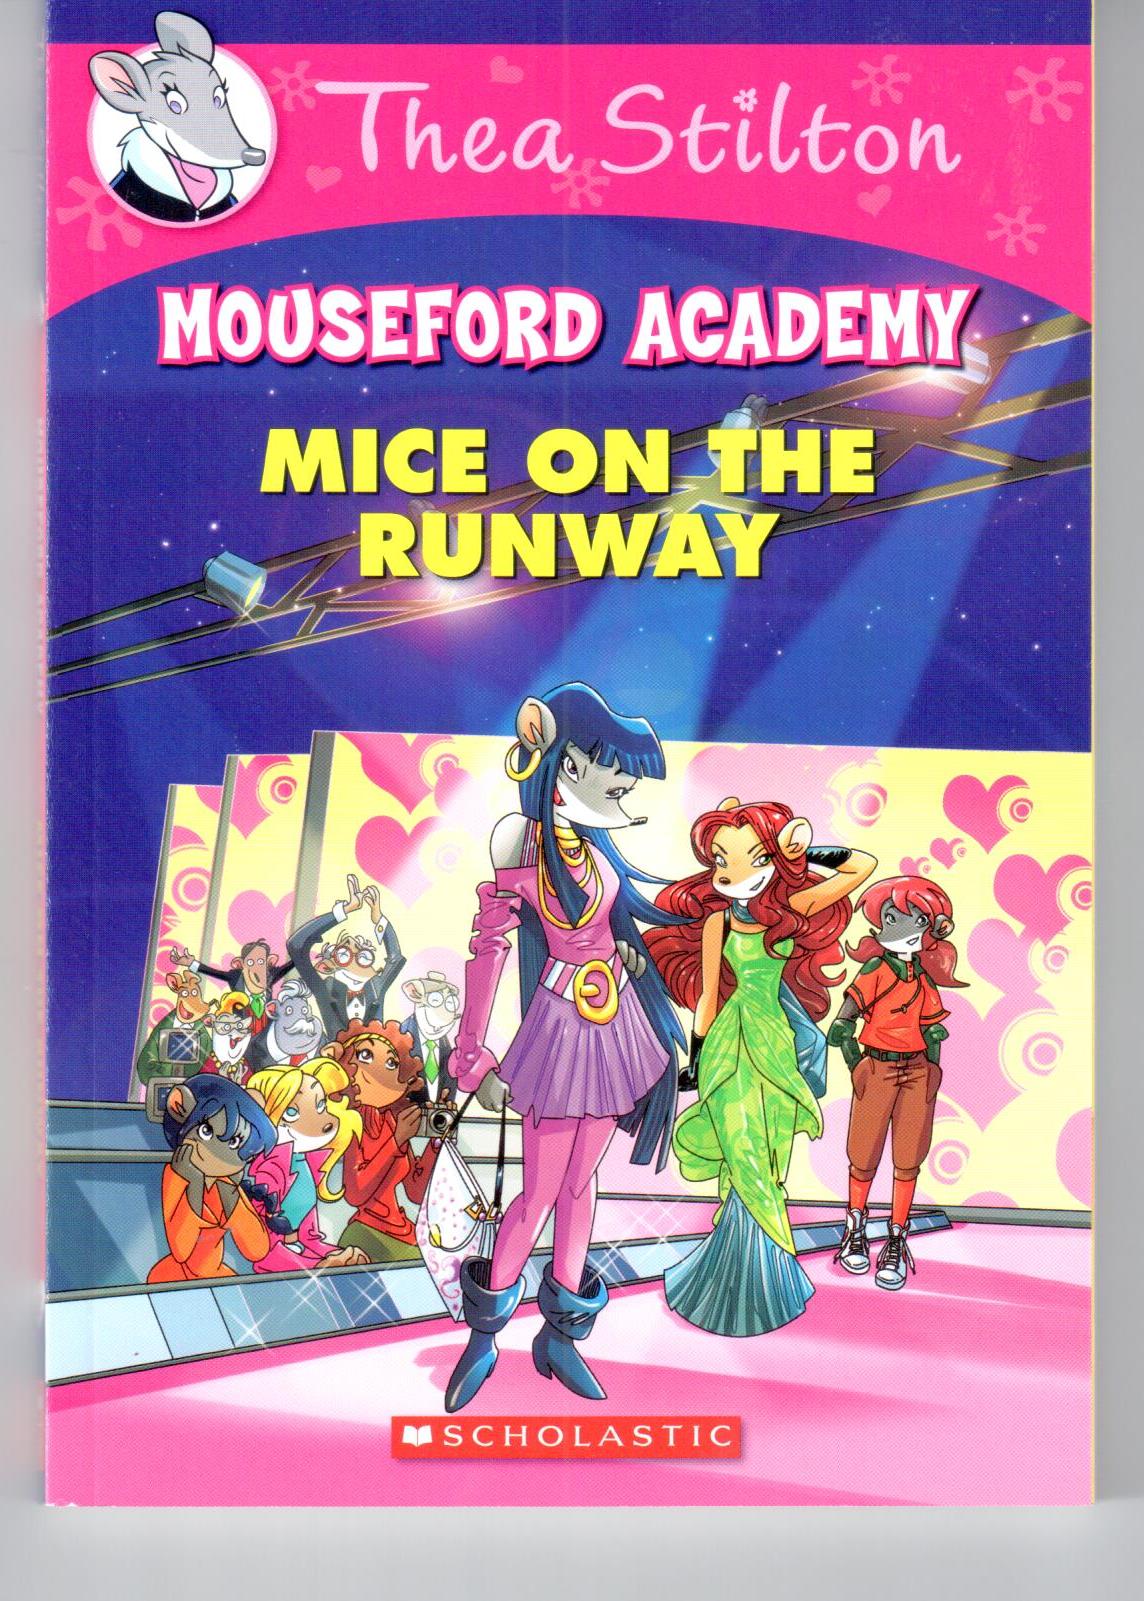 Mice on the runway